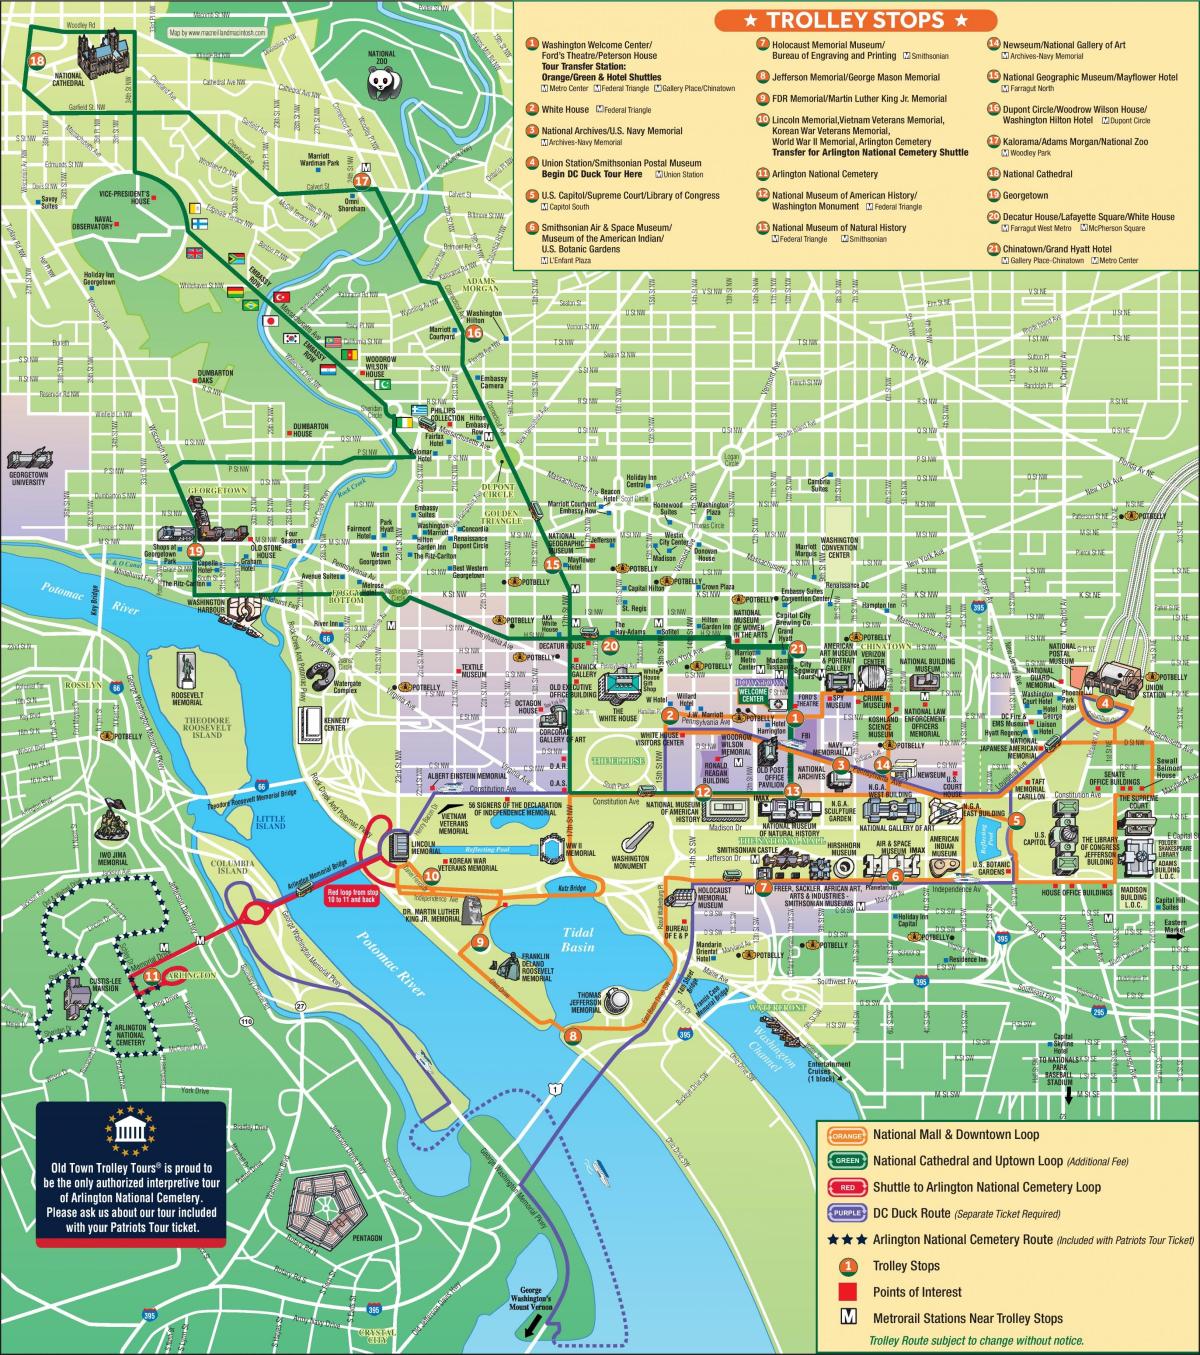 Washington DC trolley stations map